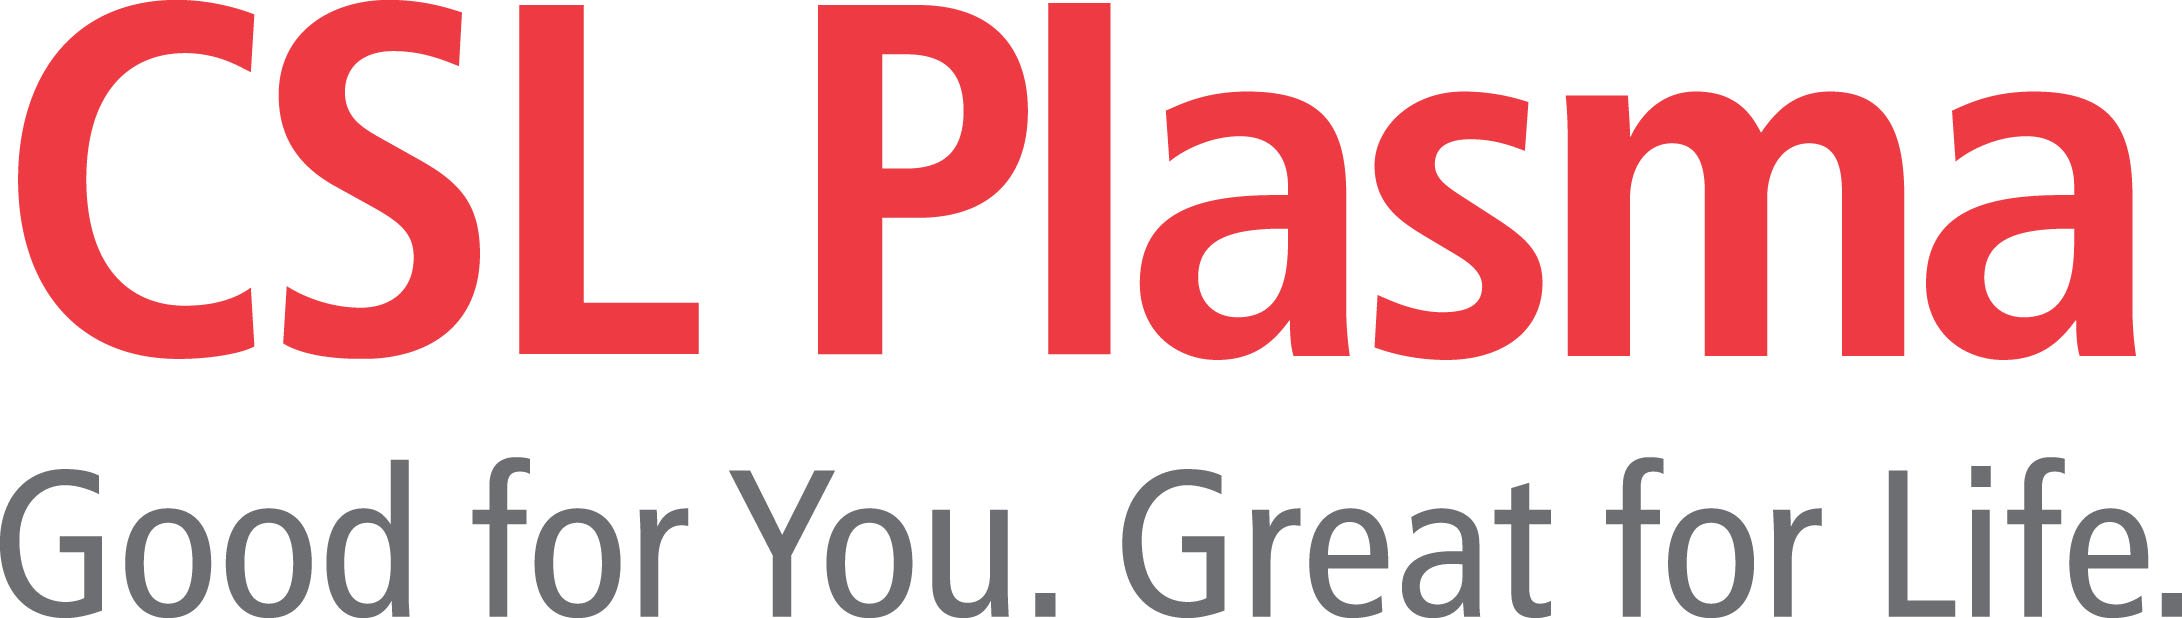 CSL Plasma Logo with Tagline - JPG.jpg